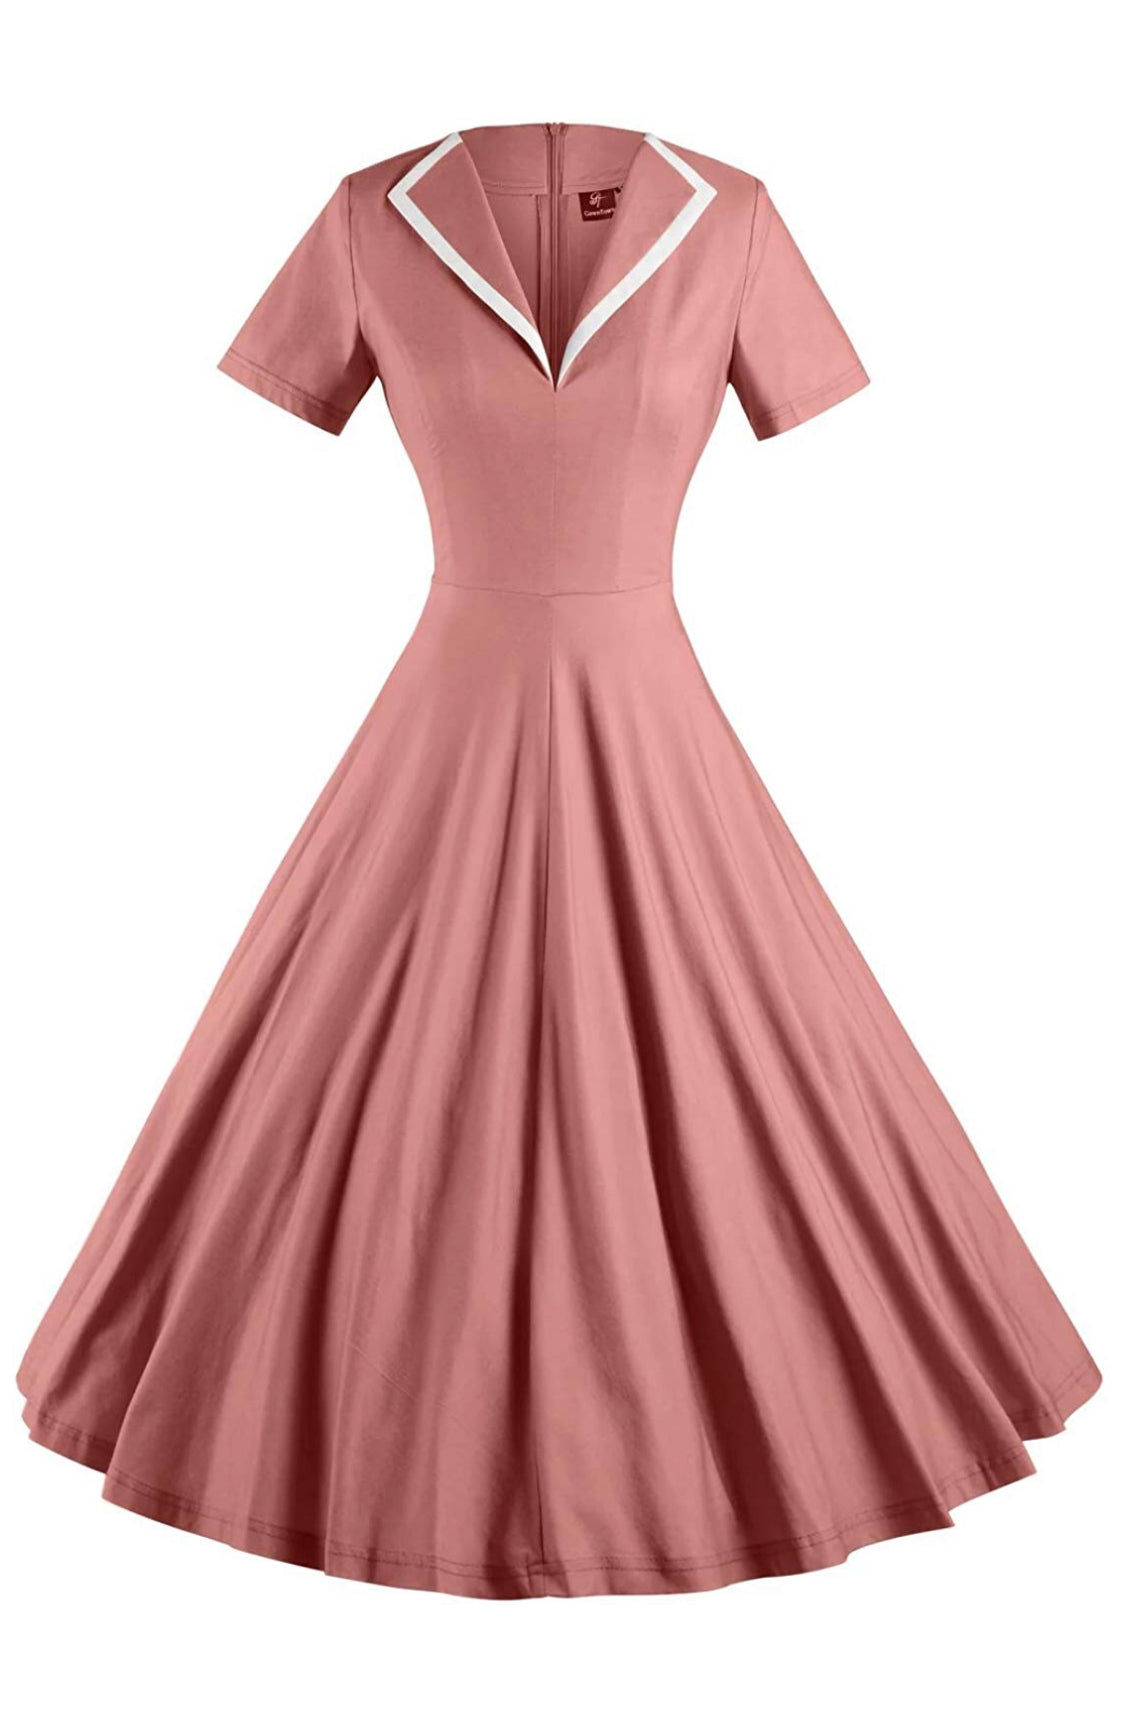 retro 50s dresses